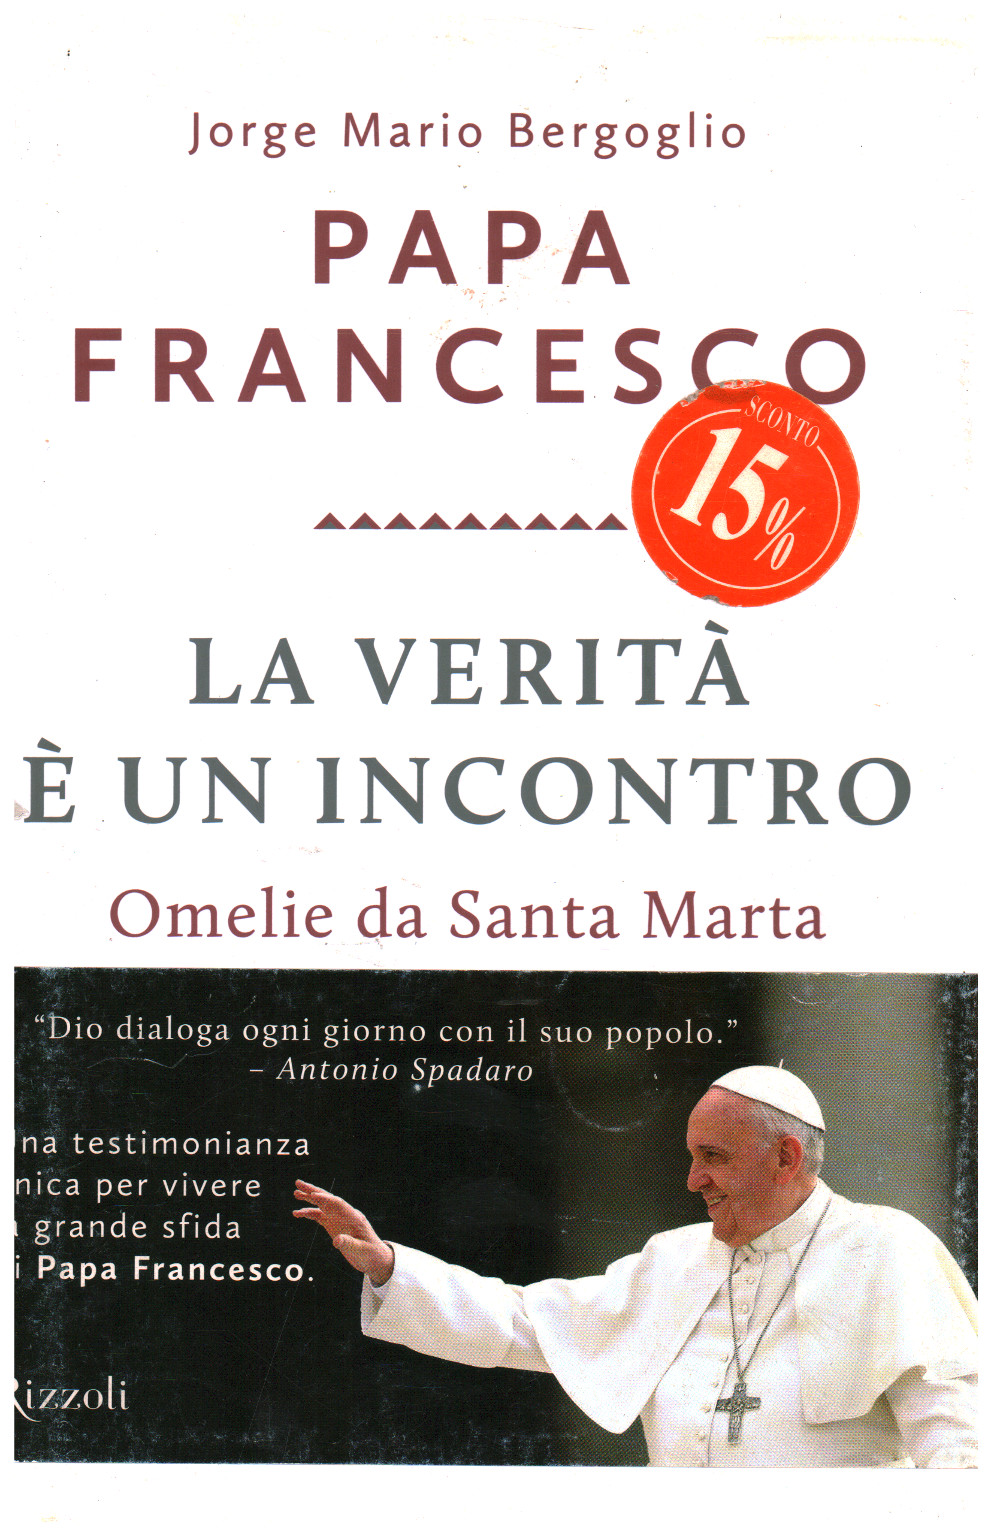 The truth is an encounter, Jorge Mario Bergoglio